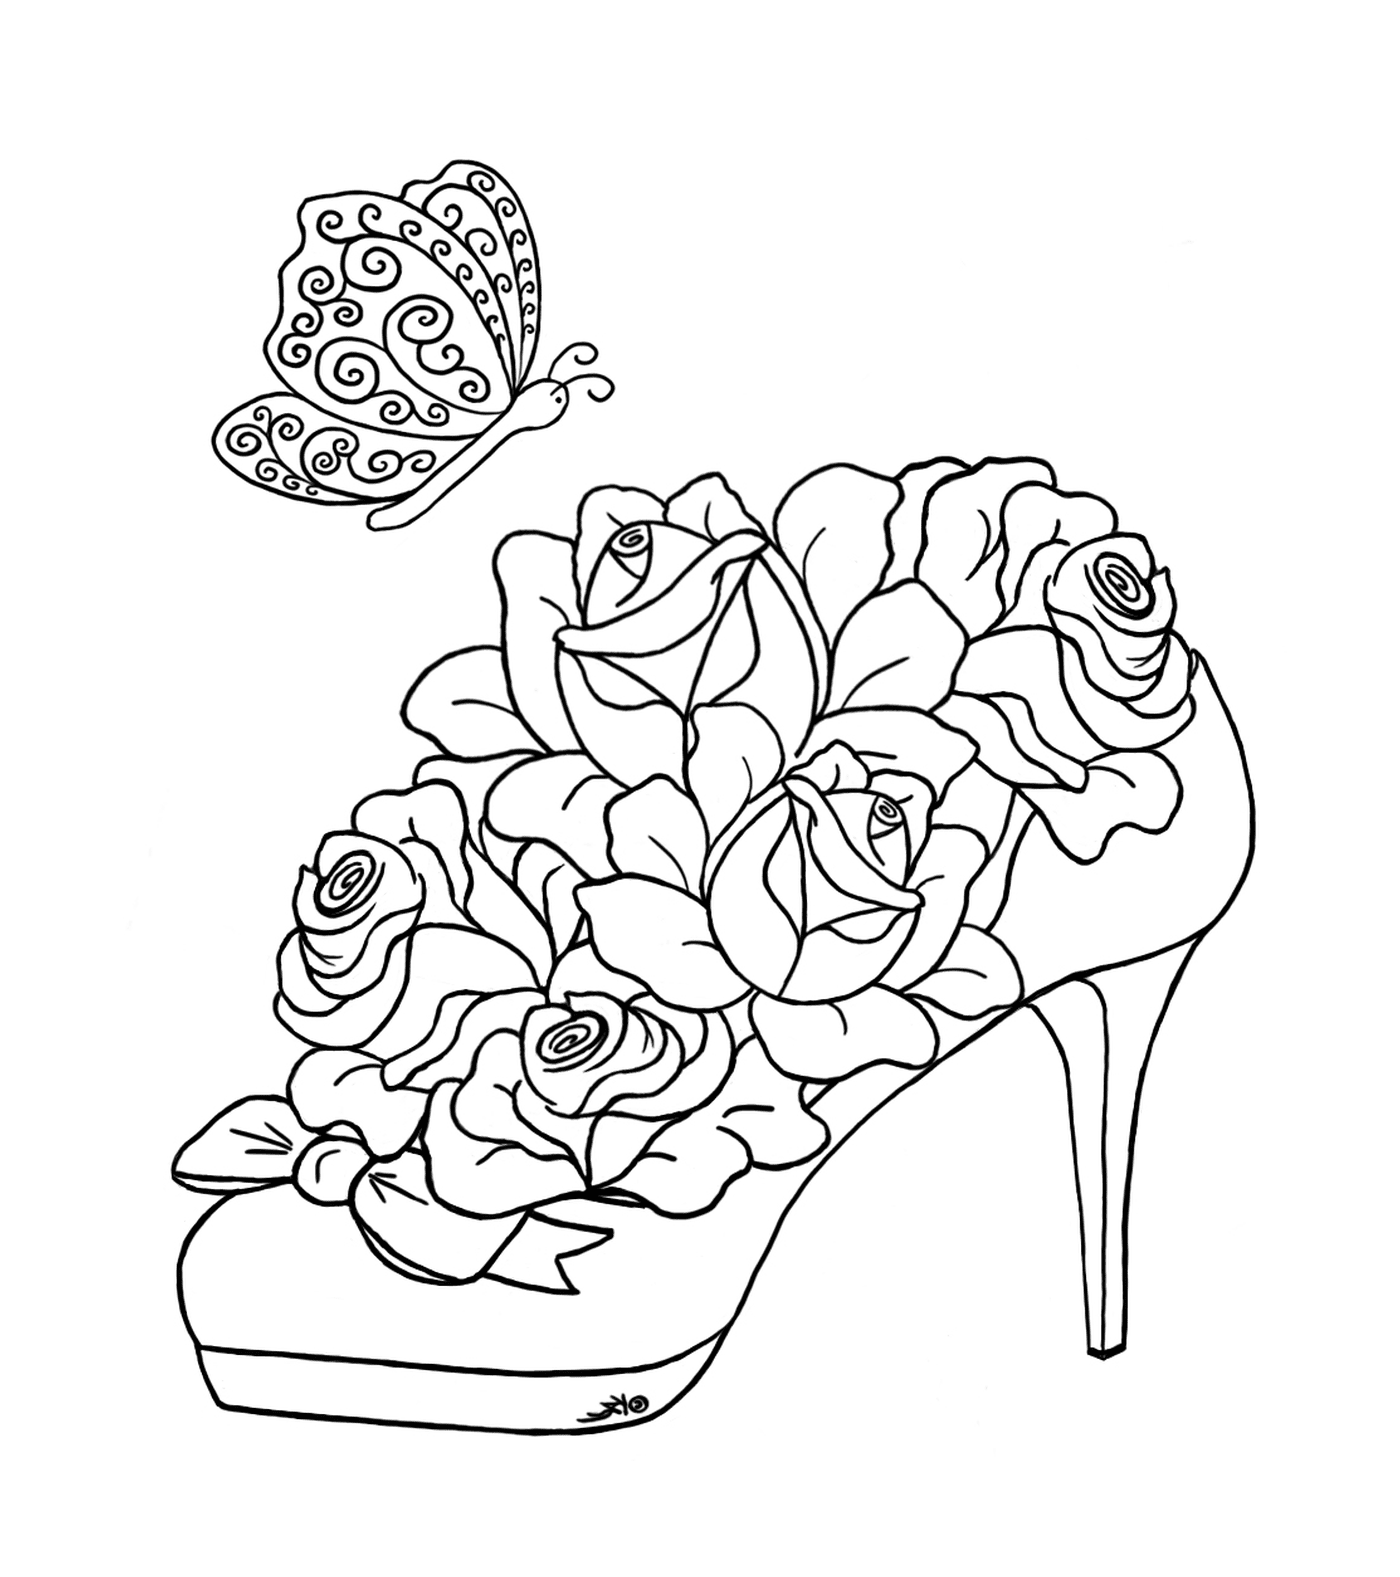  Schuhe mit dekorativen Rosen 